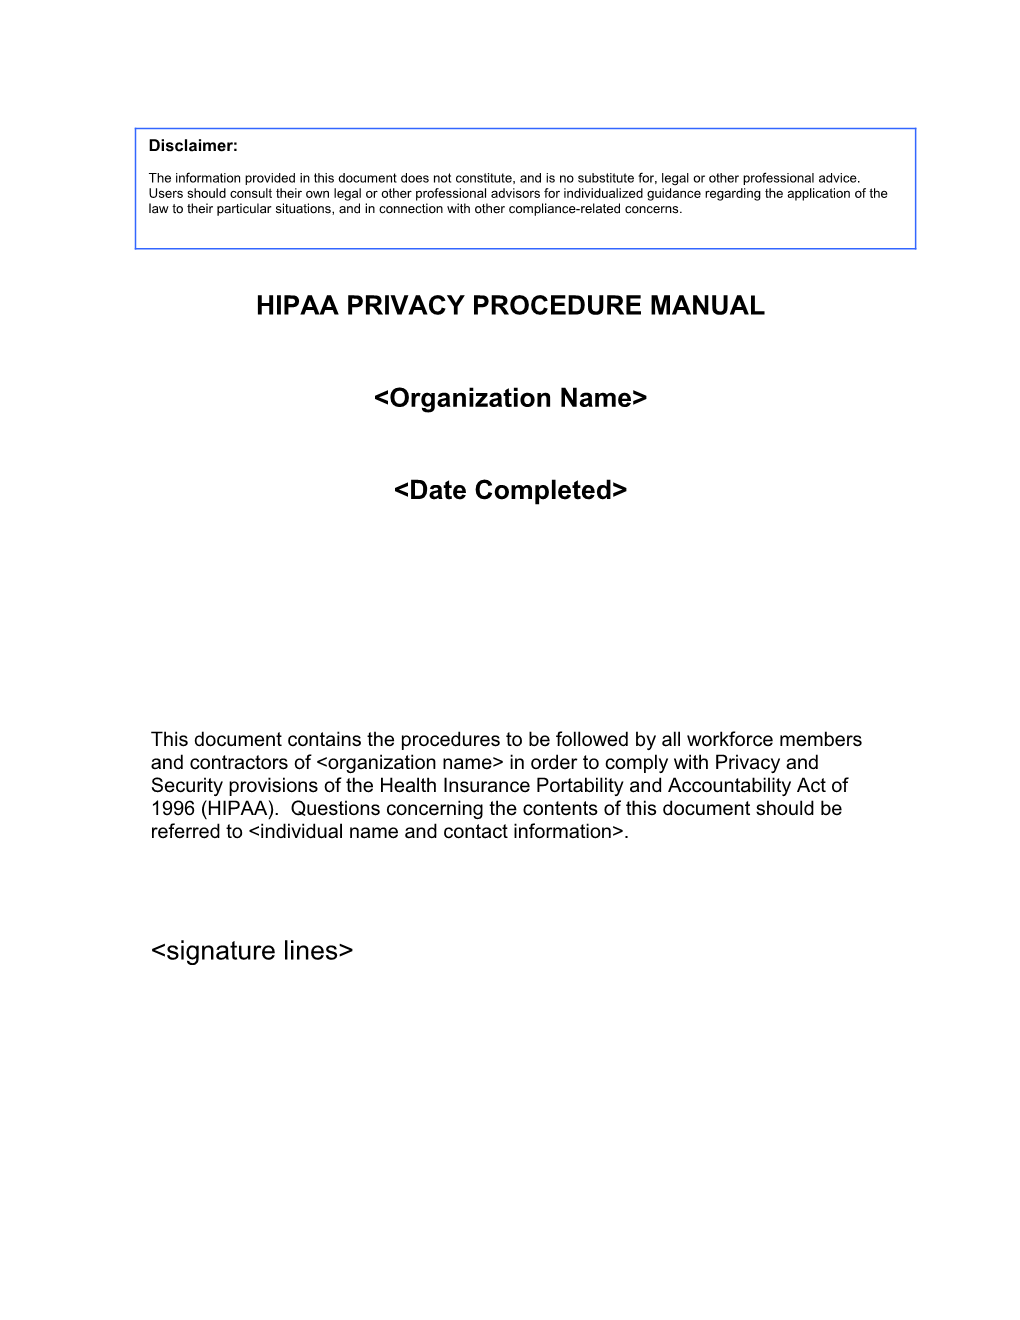 HIPAA Privacy Procedure Manual Template